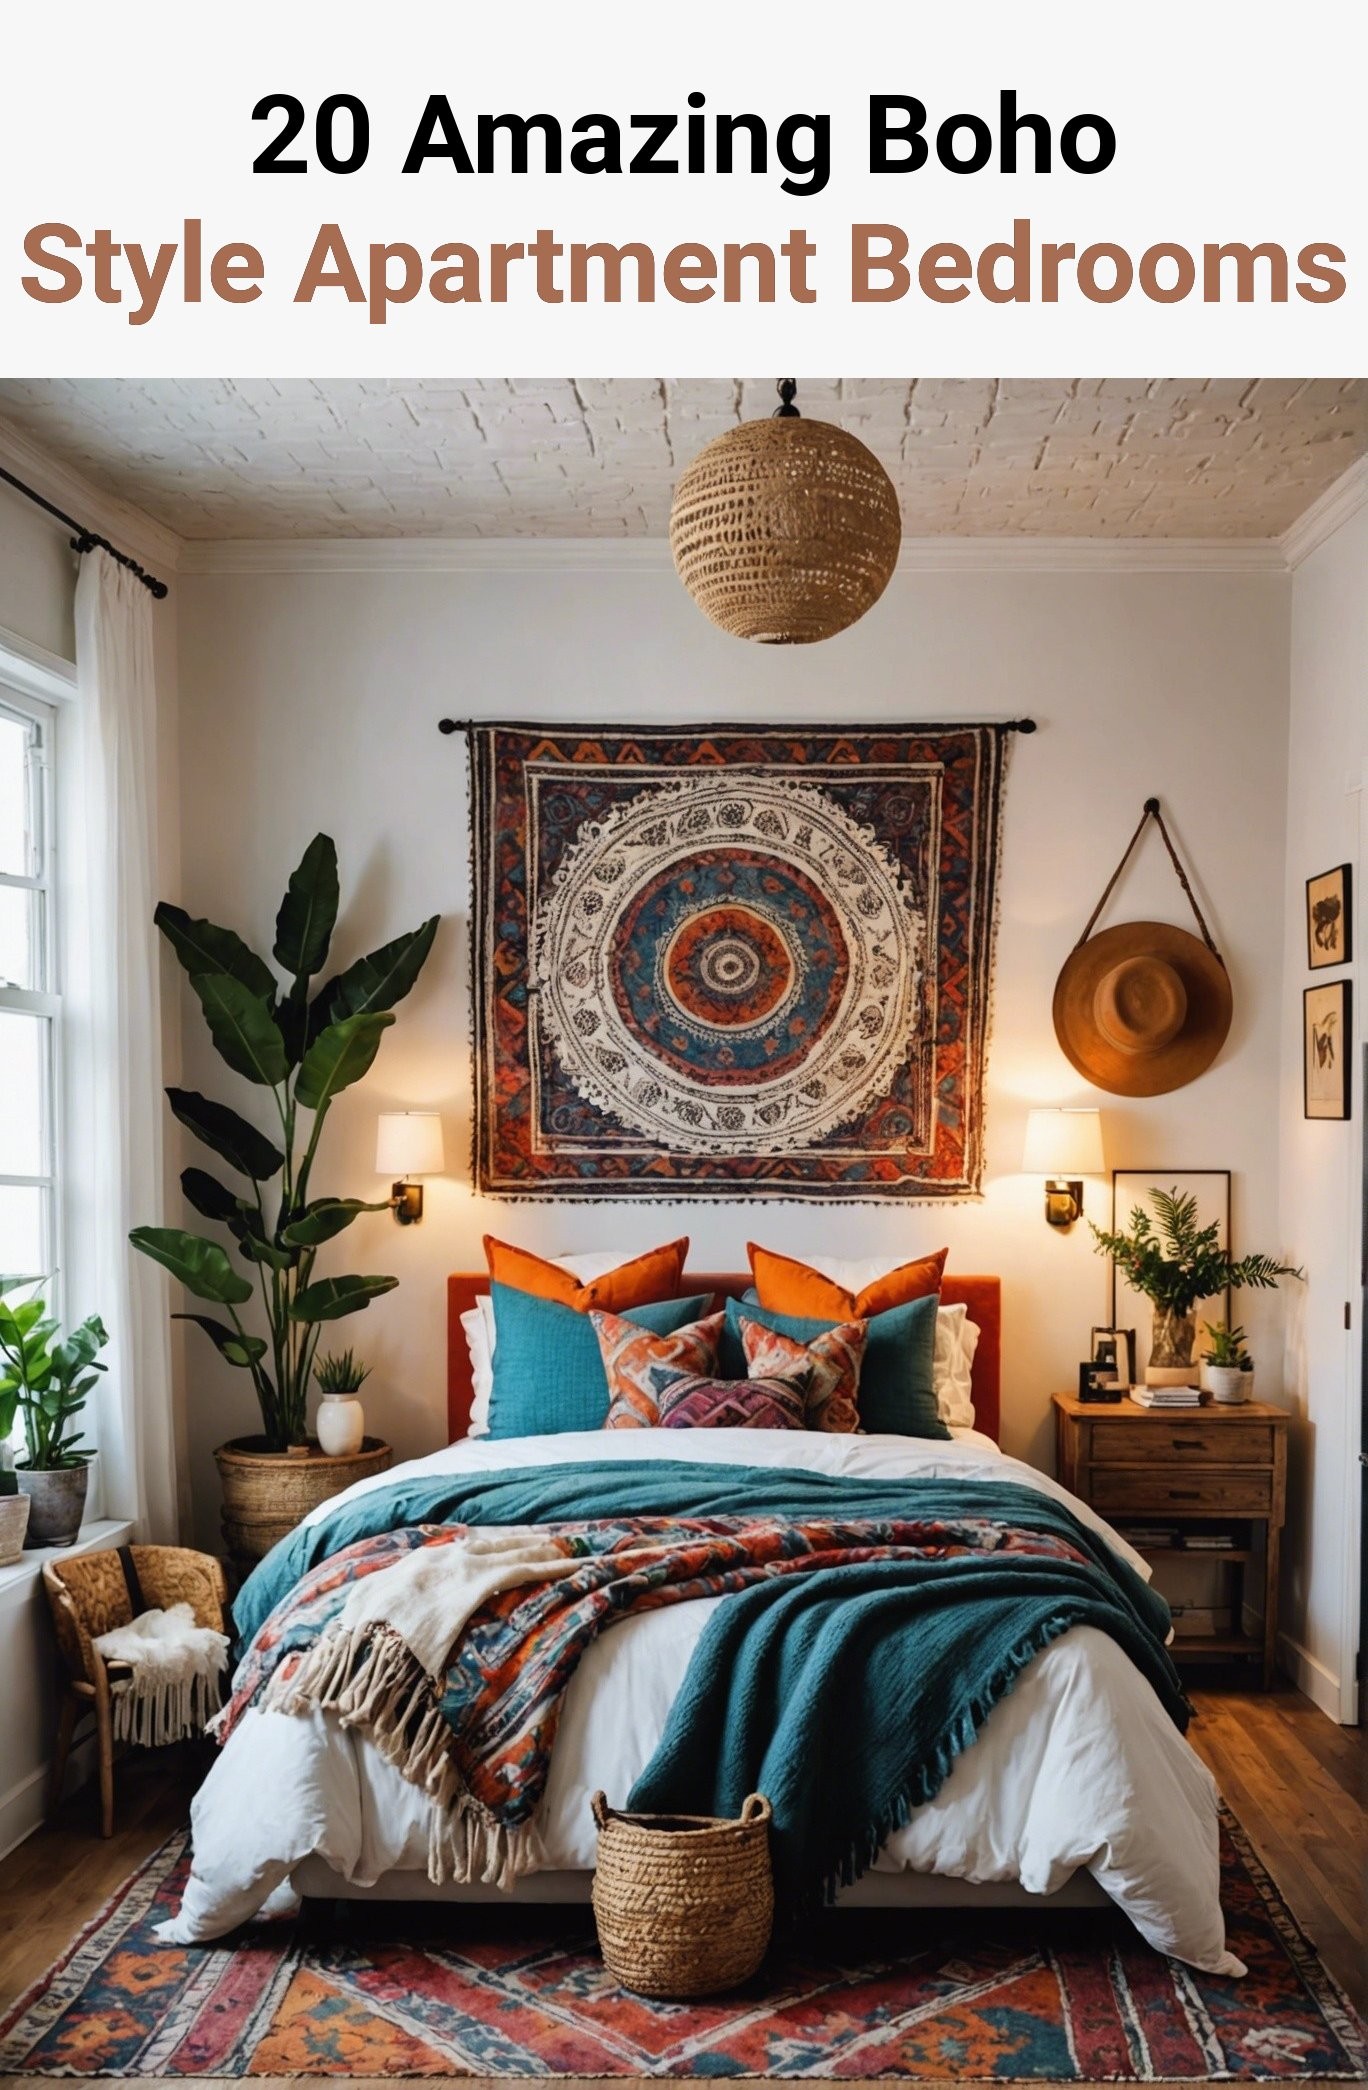 20 Amazing Boho Style Apartment Bedrooms